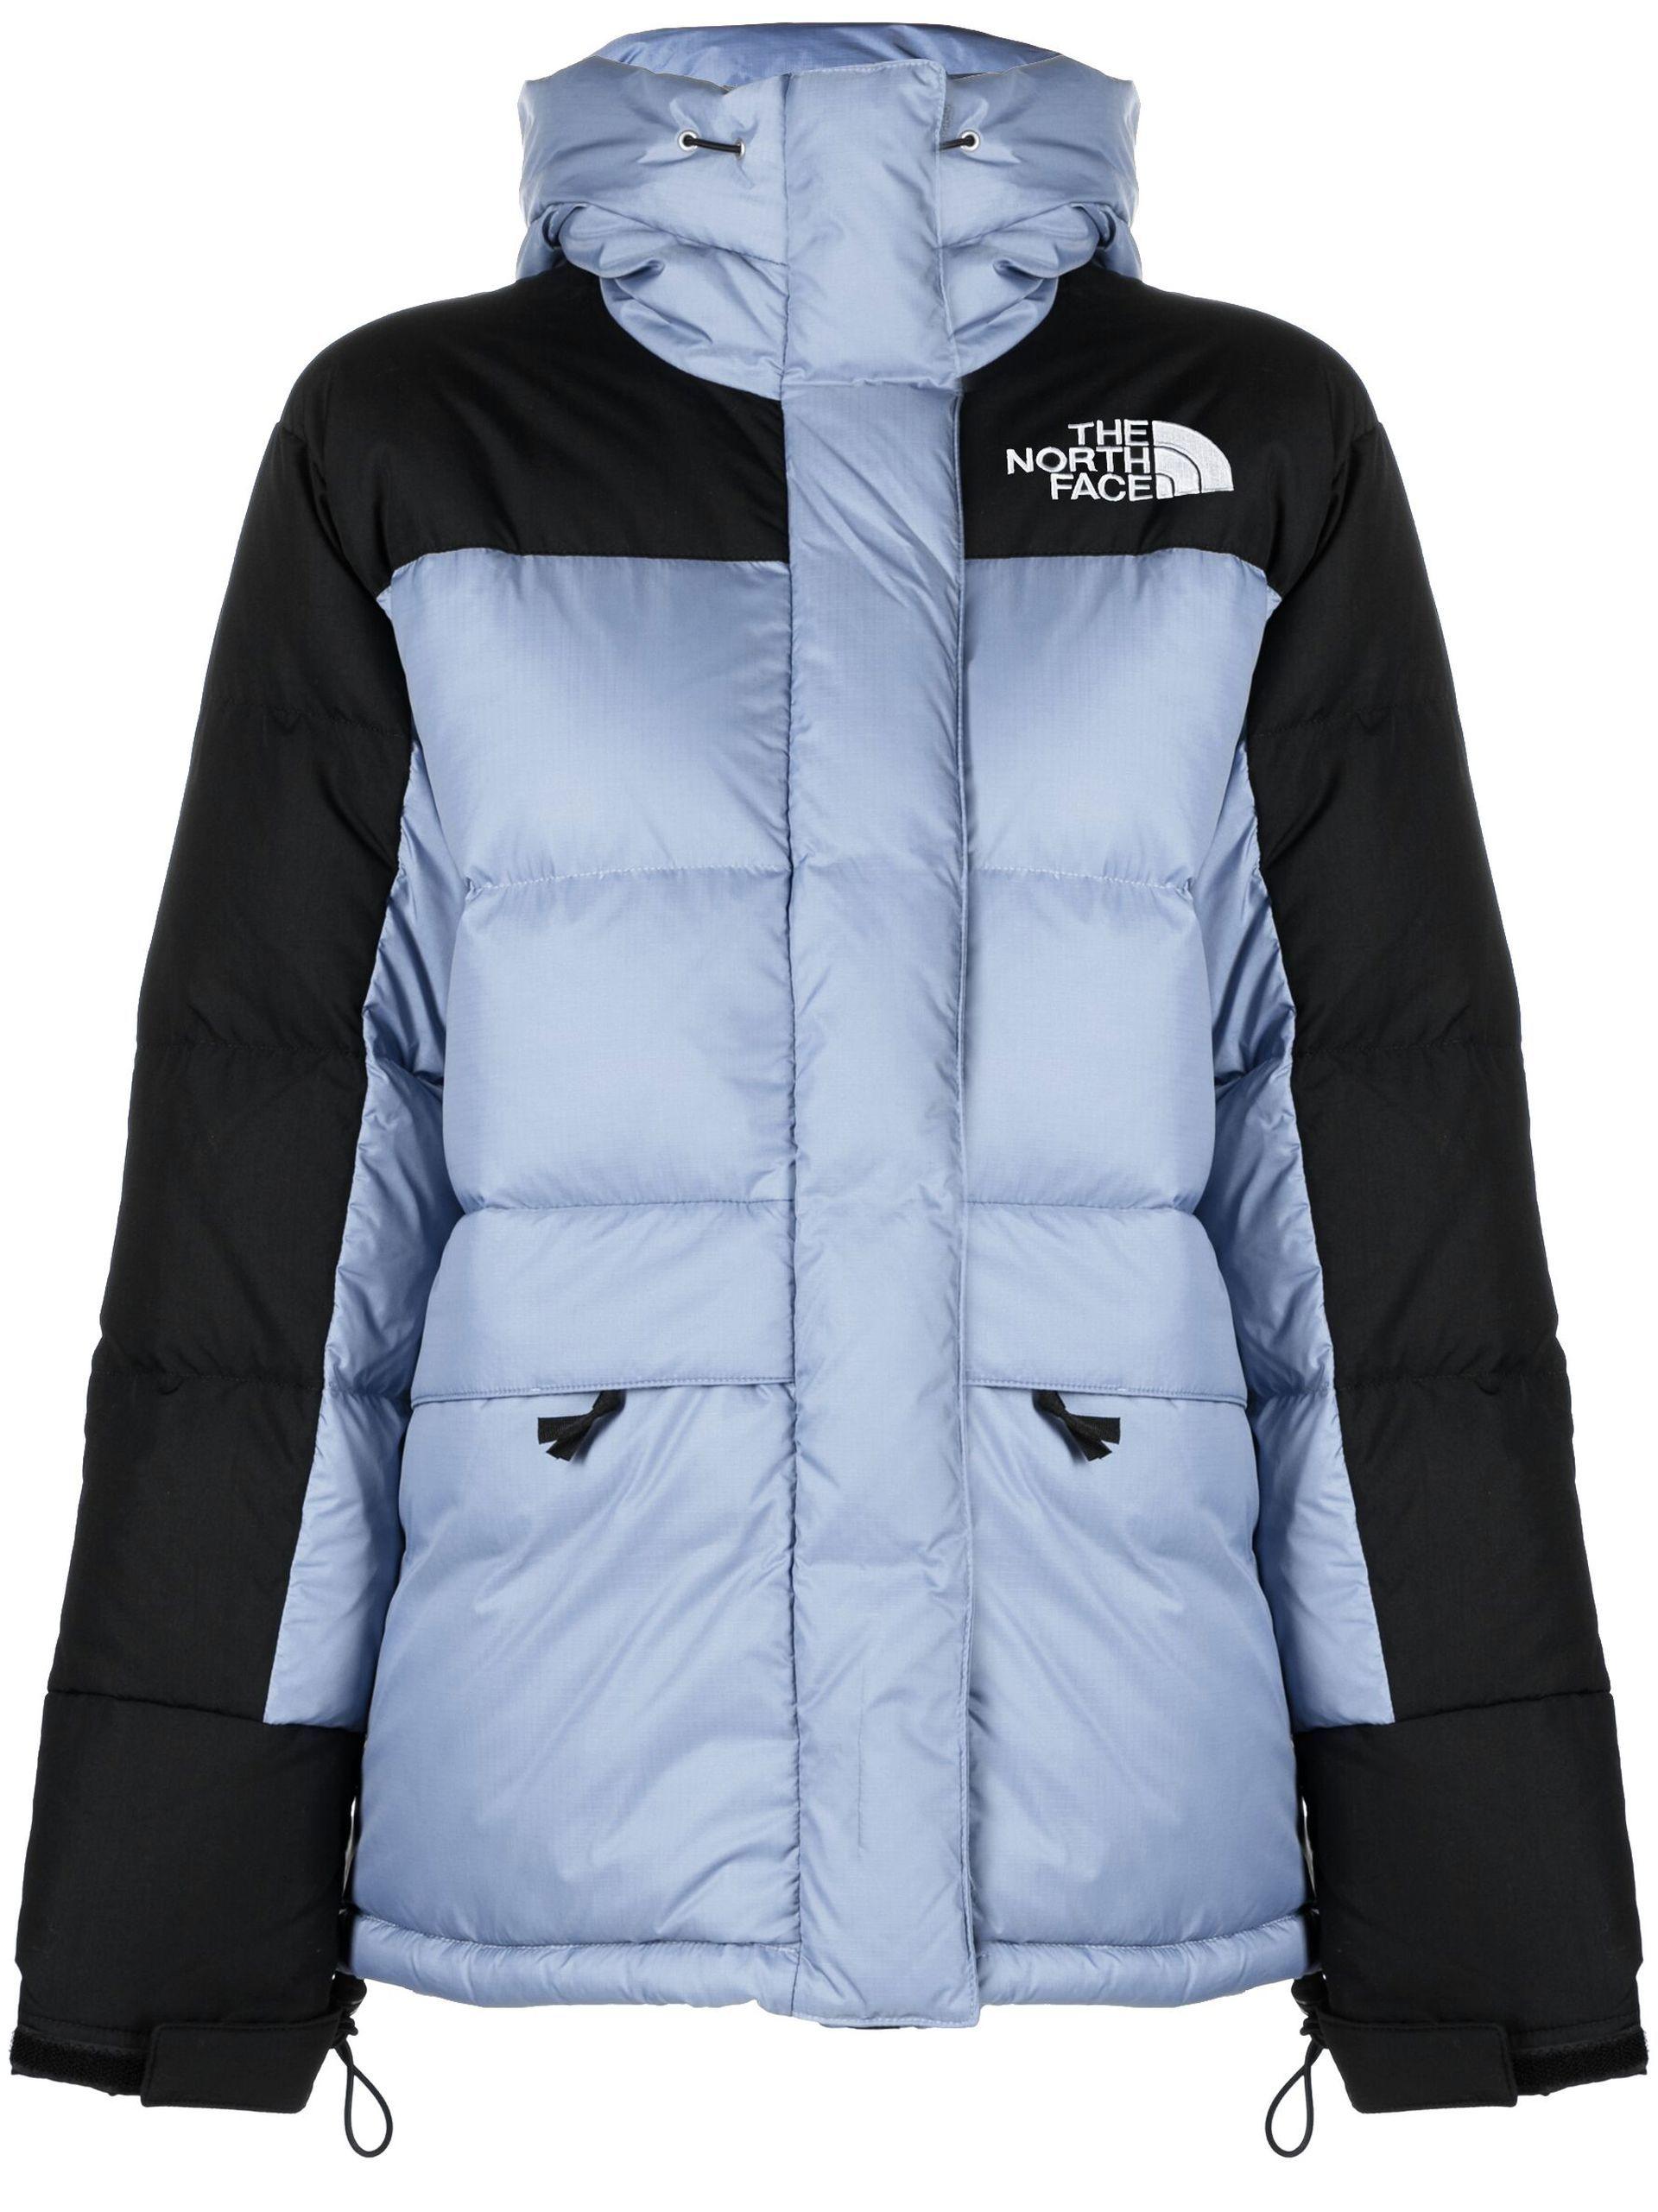 Buy The North Face Himalayan Down Parka Jacket from Next Belgium